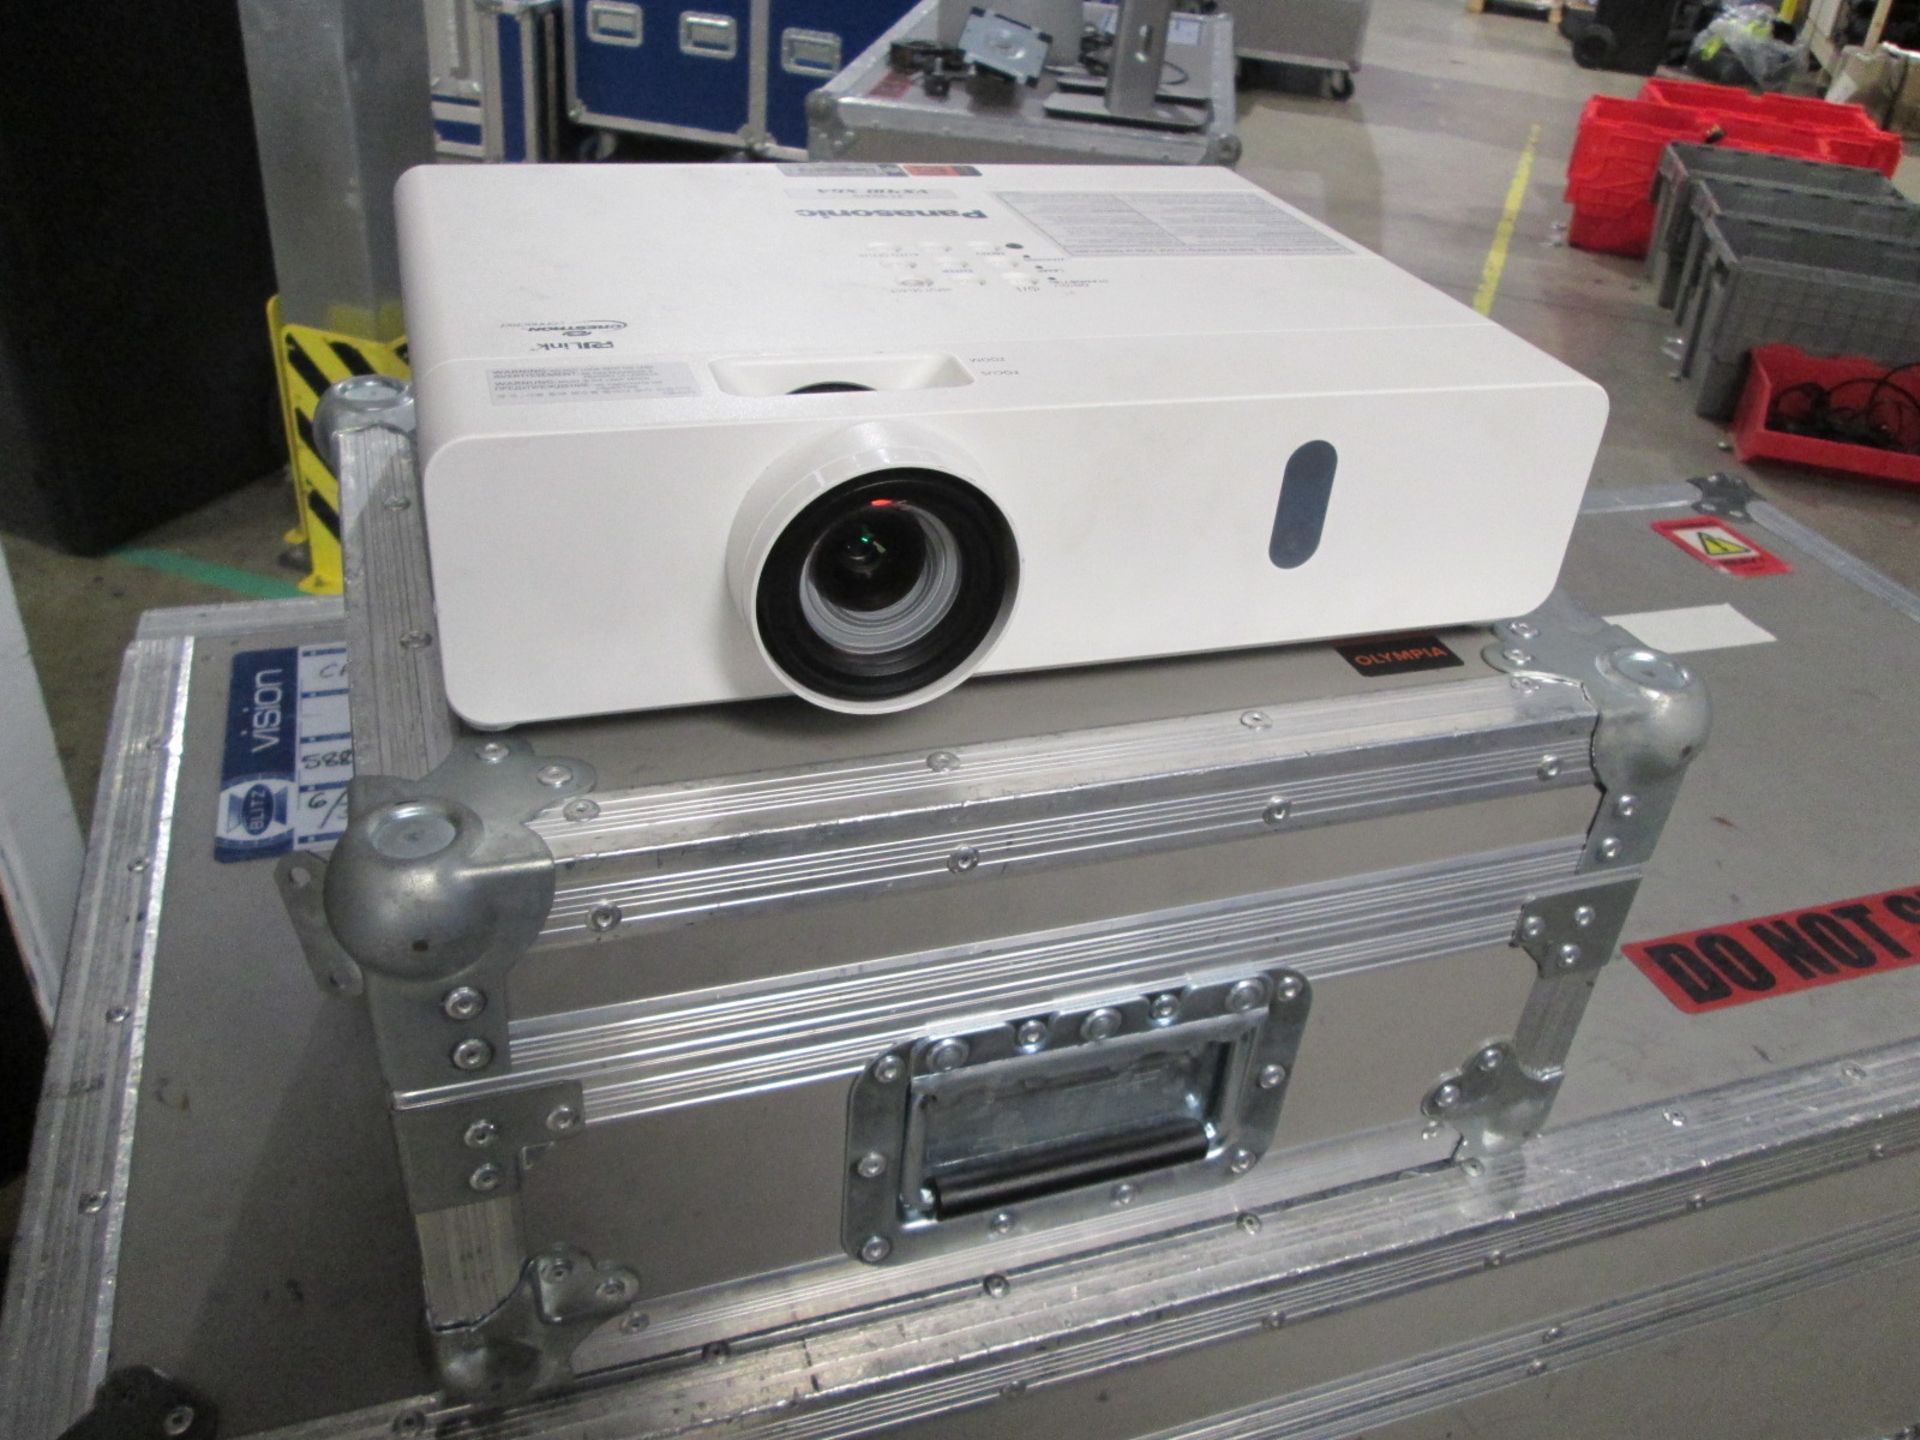 Panasonic PT-VX410Z LCD Projector, S/N DC4640045, YOM 2014, In flight case